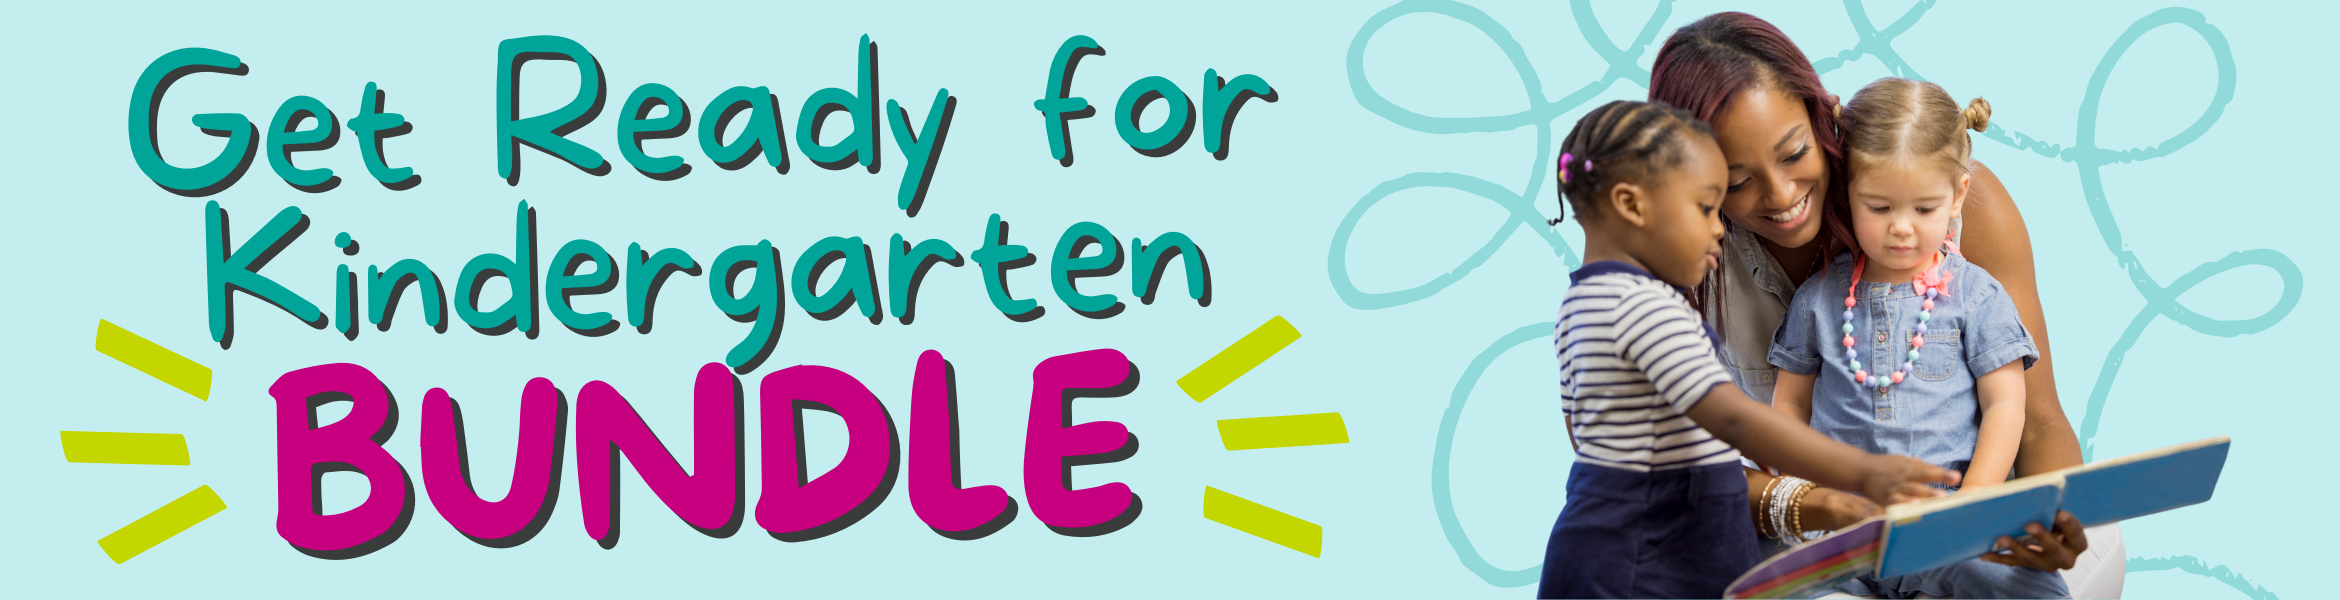 Get Ready For Kindergarten Bundles Waterloo Public Library